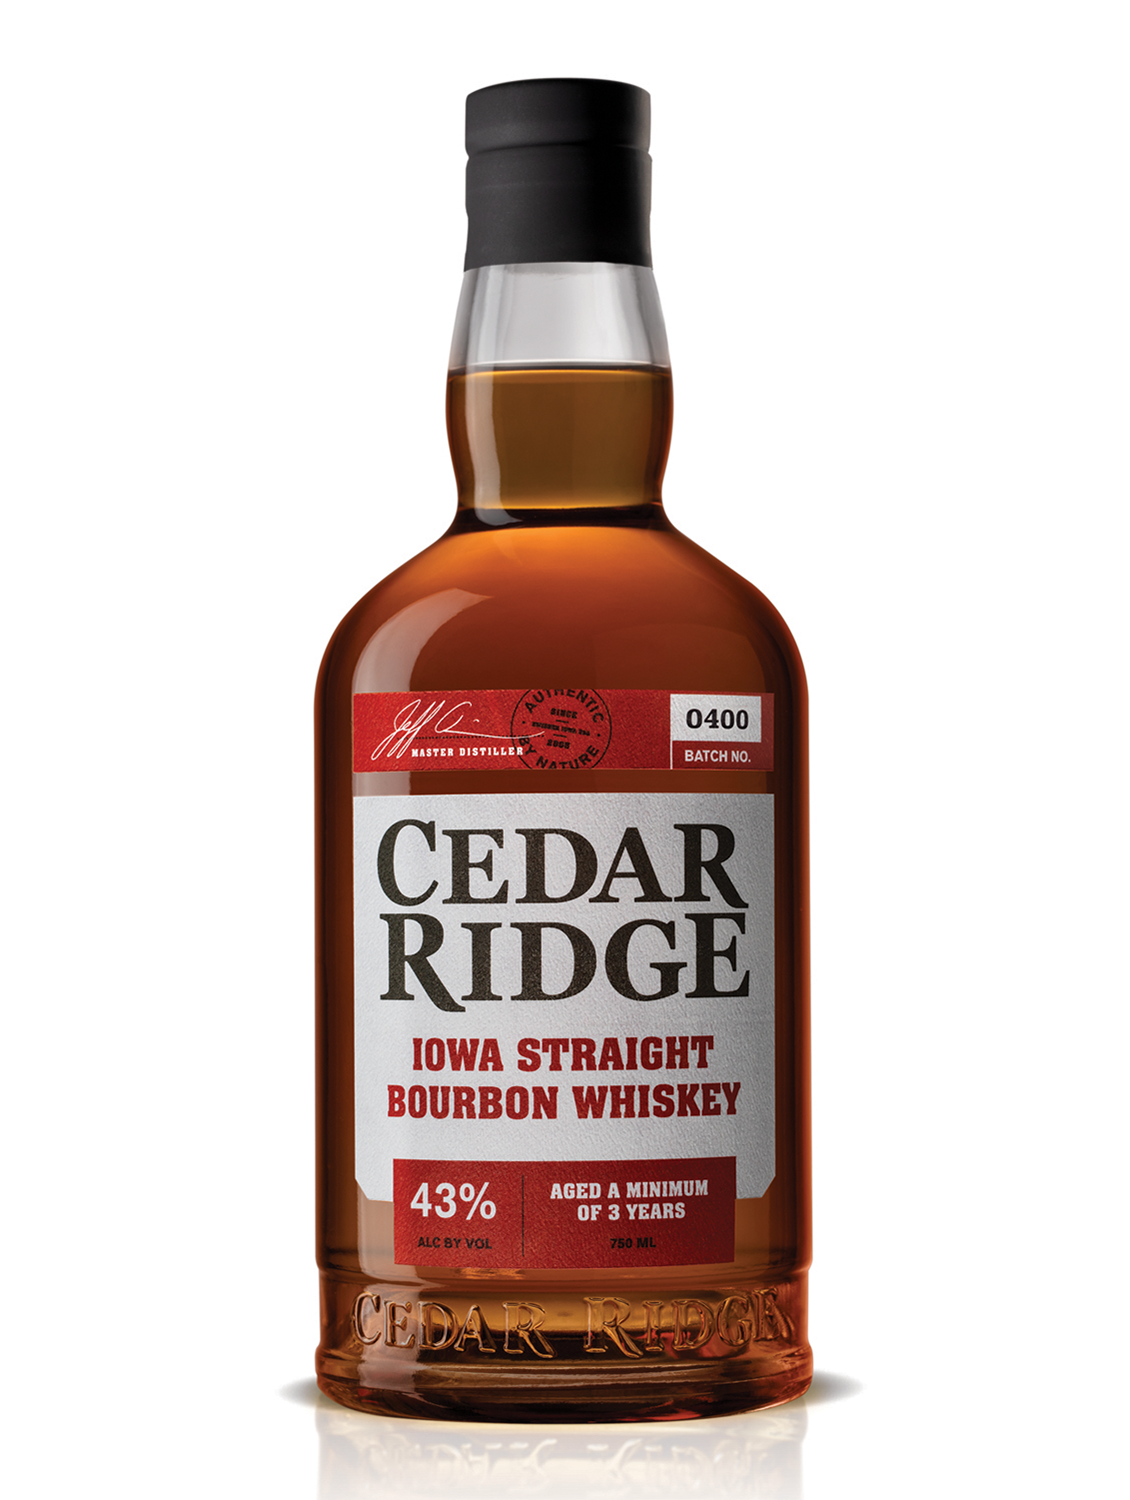 Iowa Straight Bourbon Whiskey